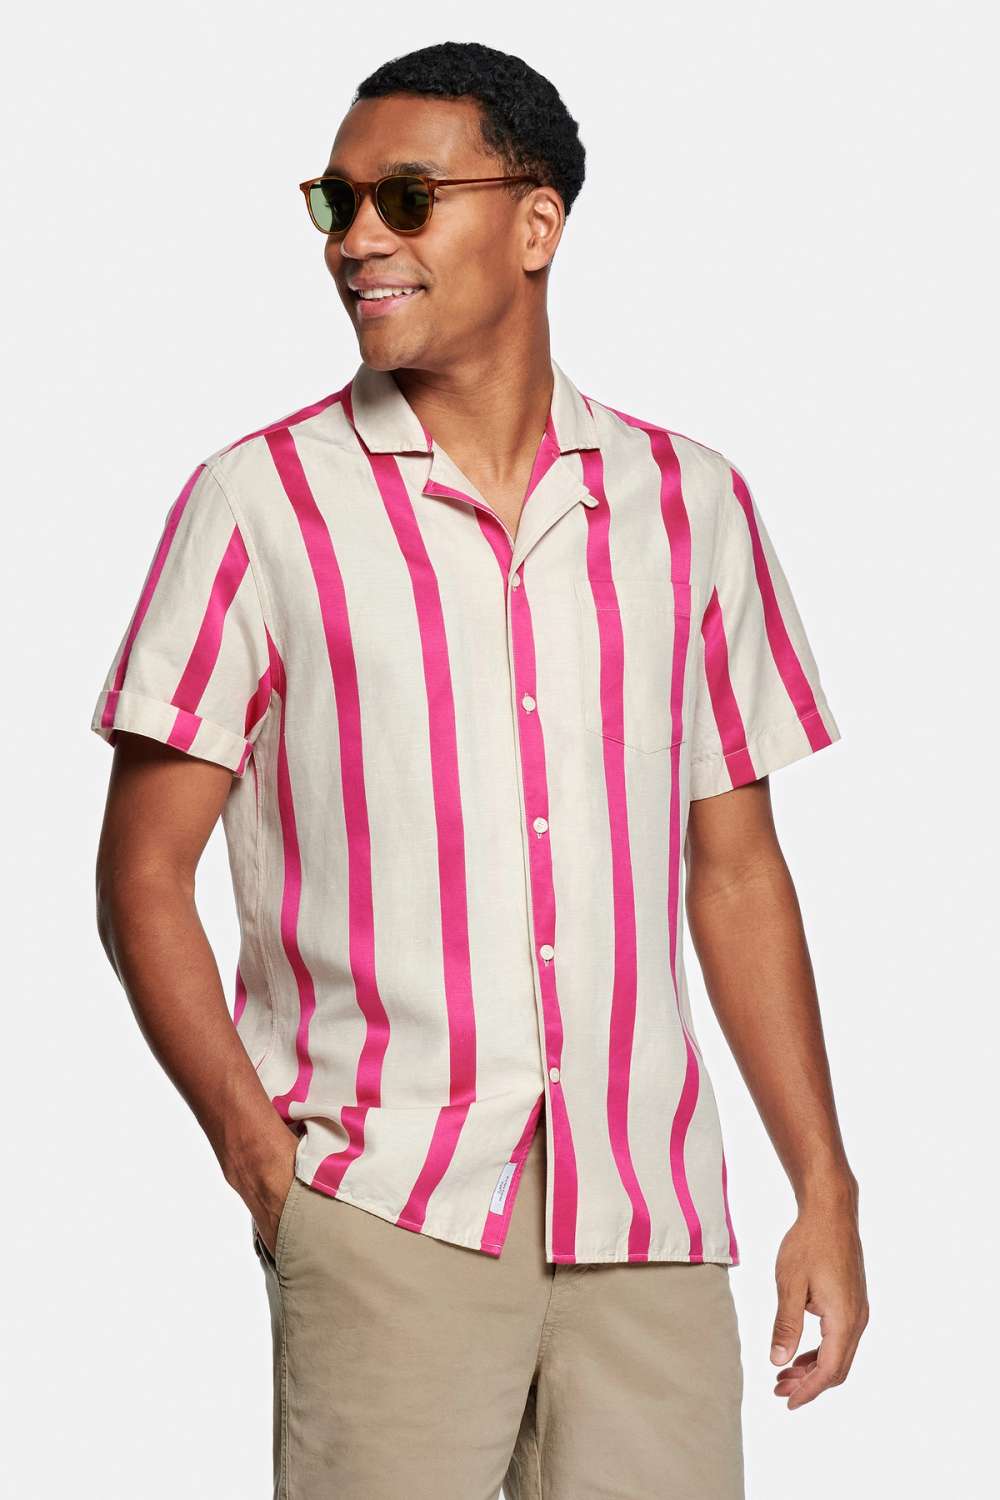 Rosa Stripes - La Camisa de Verano